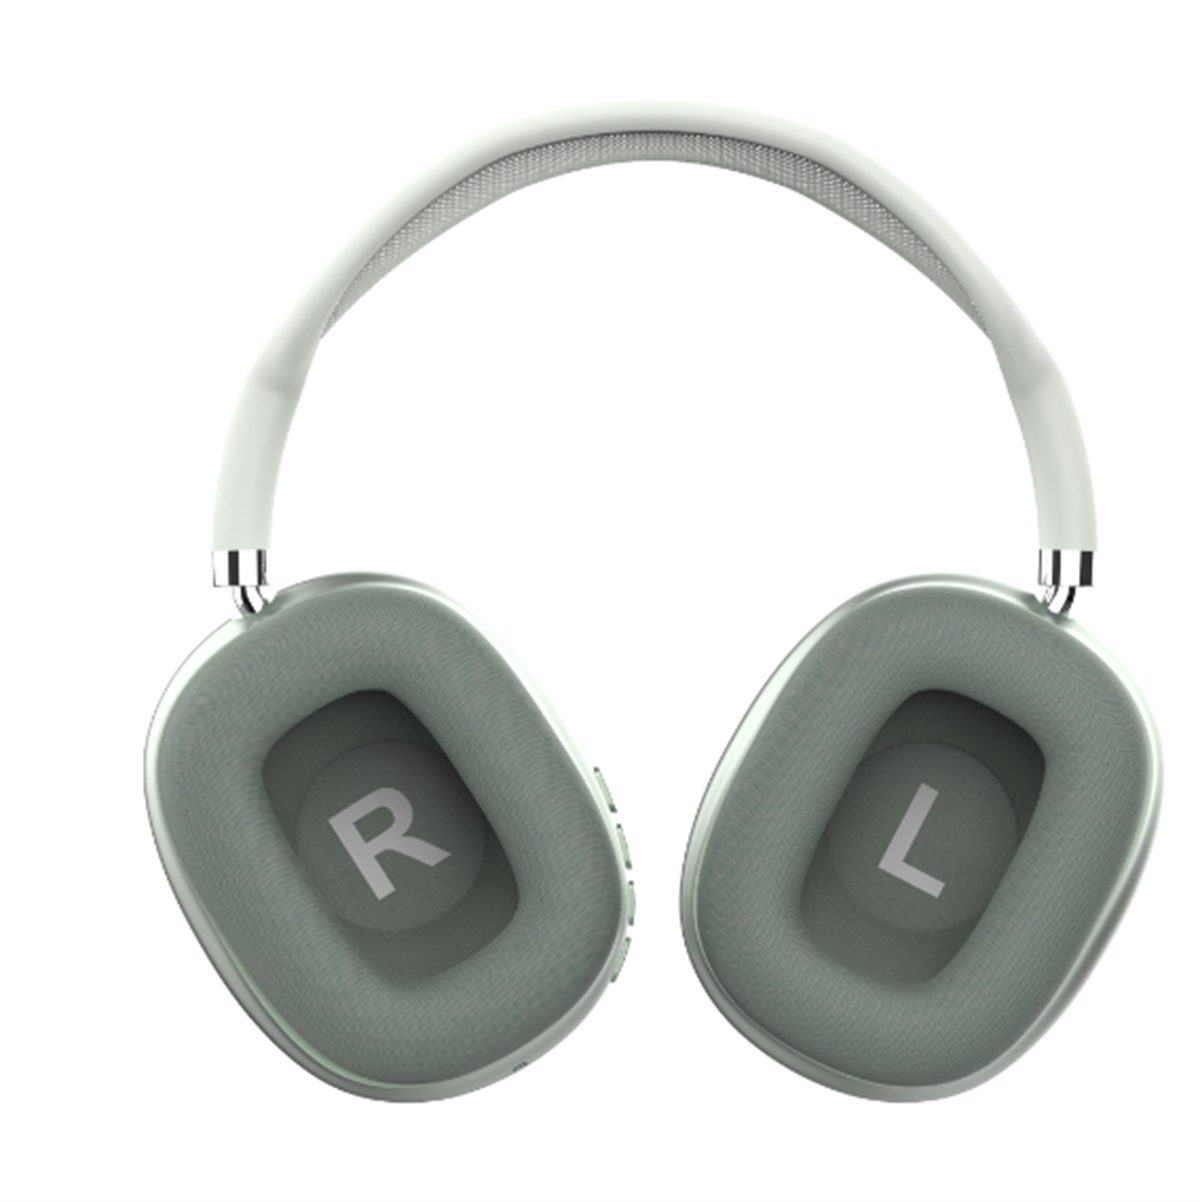 mit Grün carefully Mikrofon Akkulaufzeit selected Kopfhörer Bluetooth-Headset, Stunden 12 Gaming-Headset